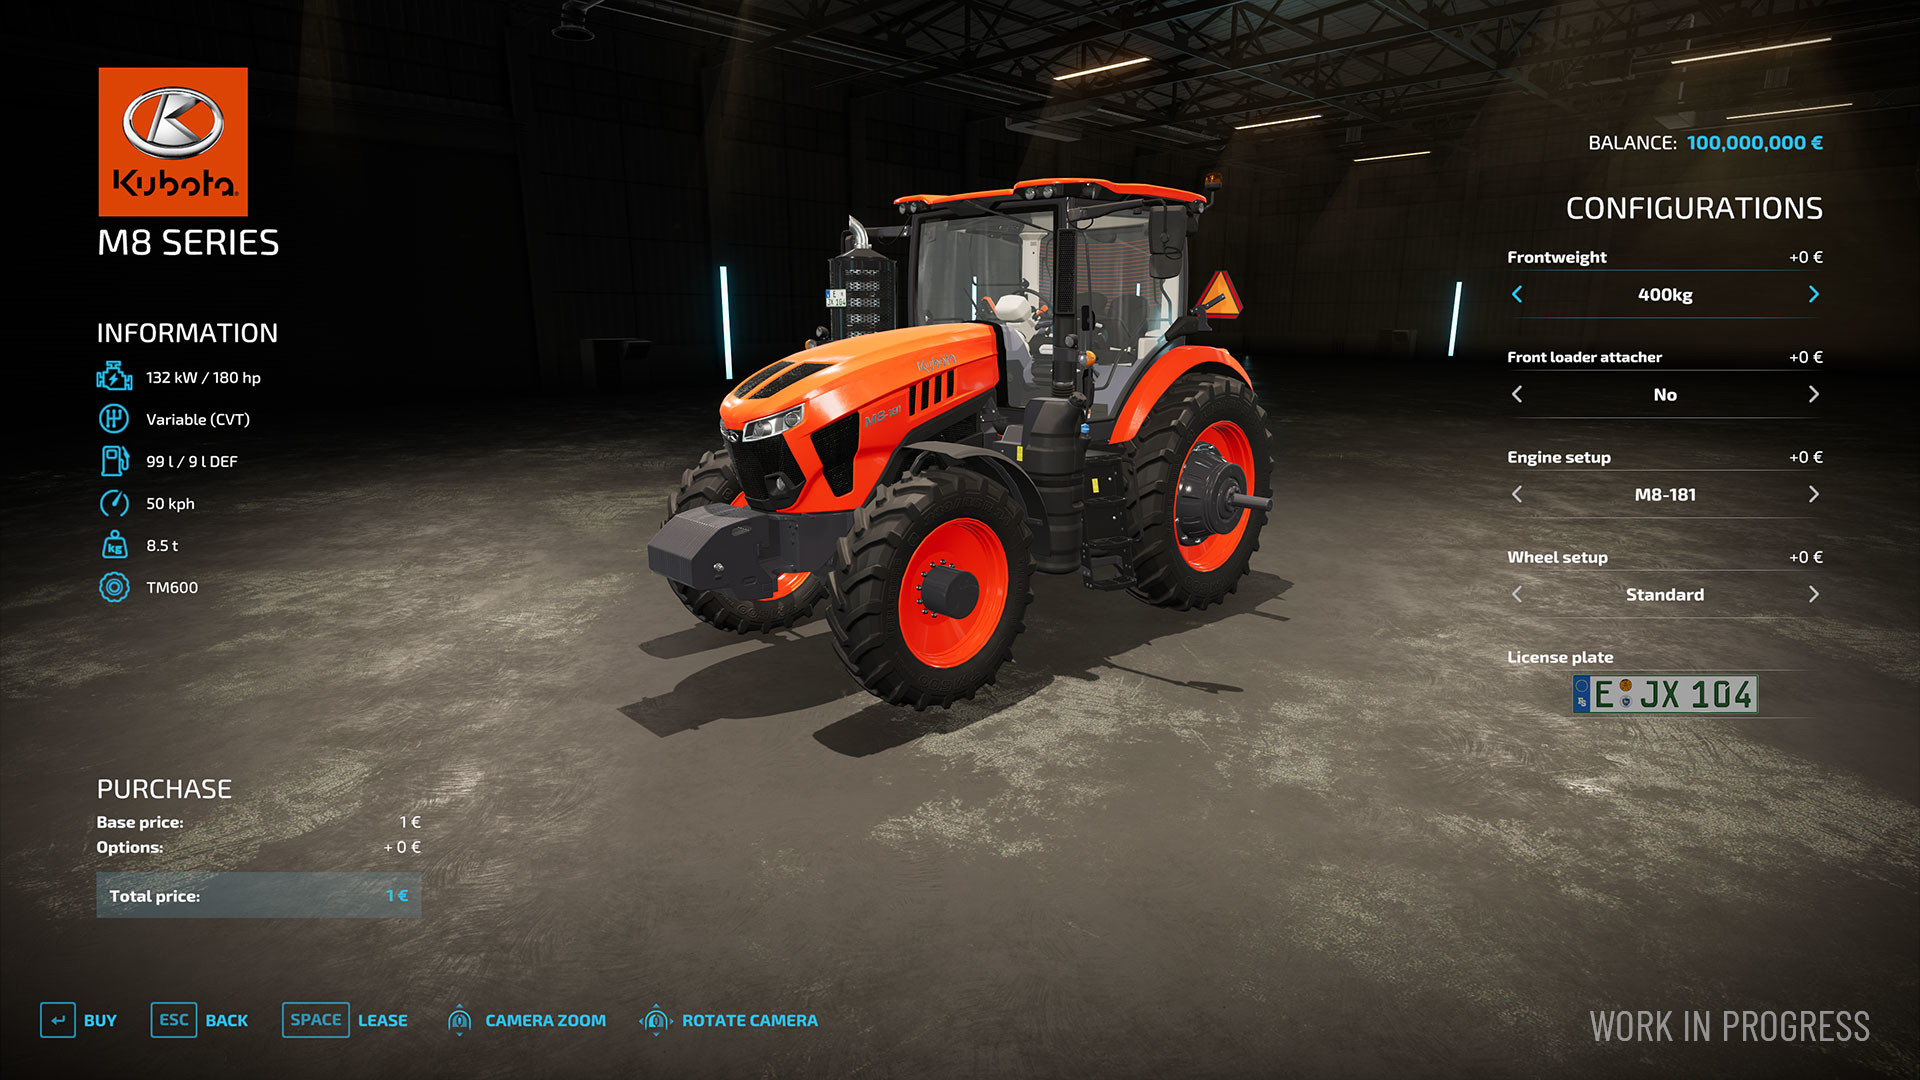 Farming Simulator 22 - Kubota Pack | WW (73a8e3b9-7555-497c-bdc7-bf0f6ff67bce)